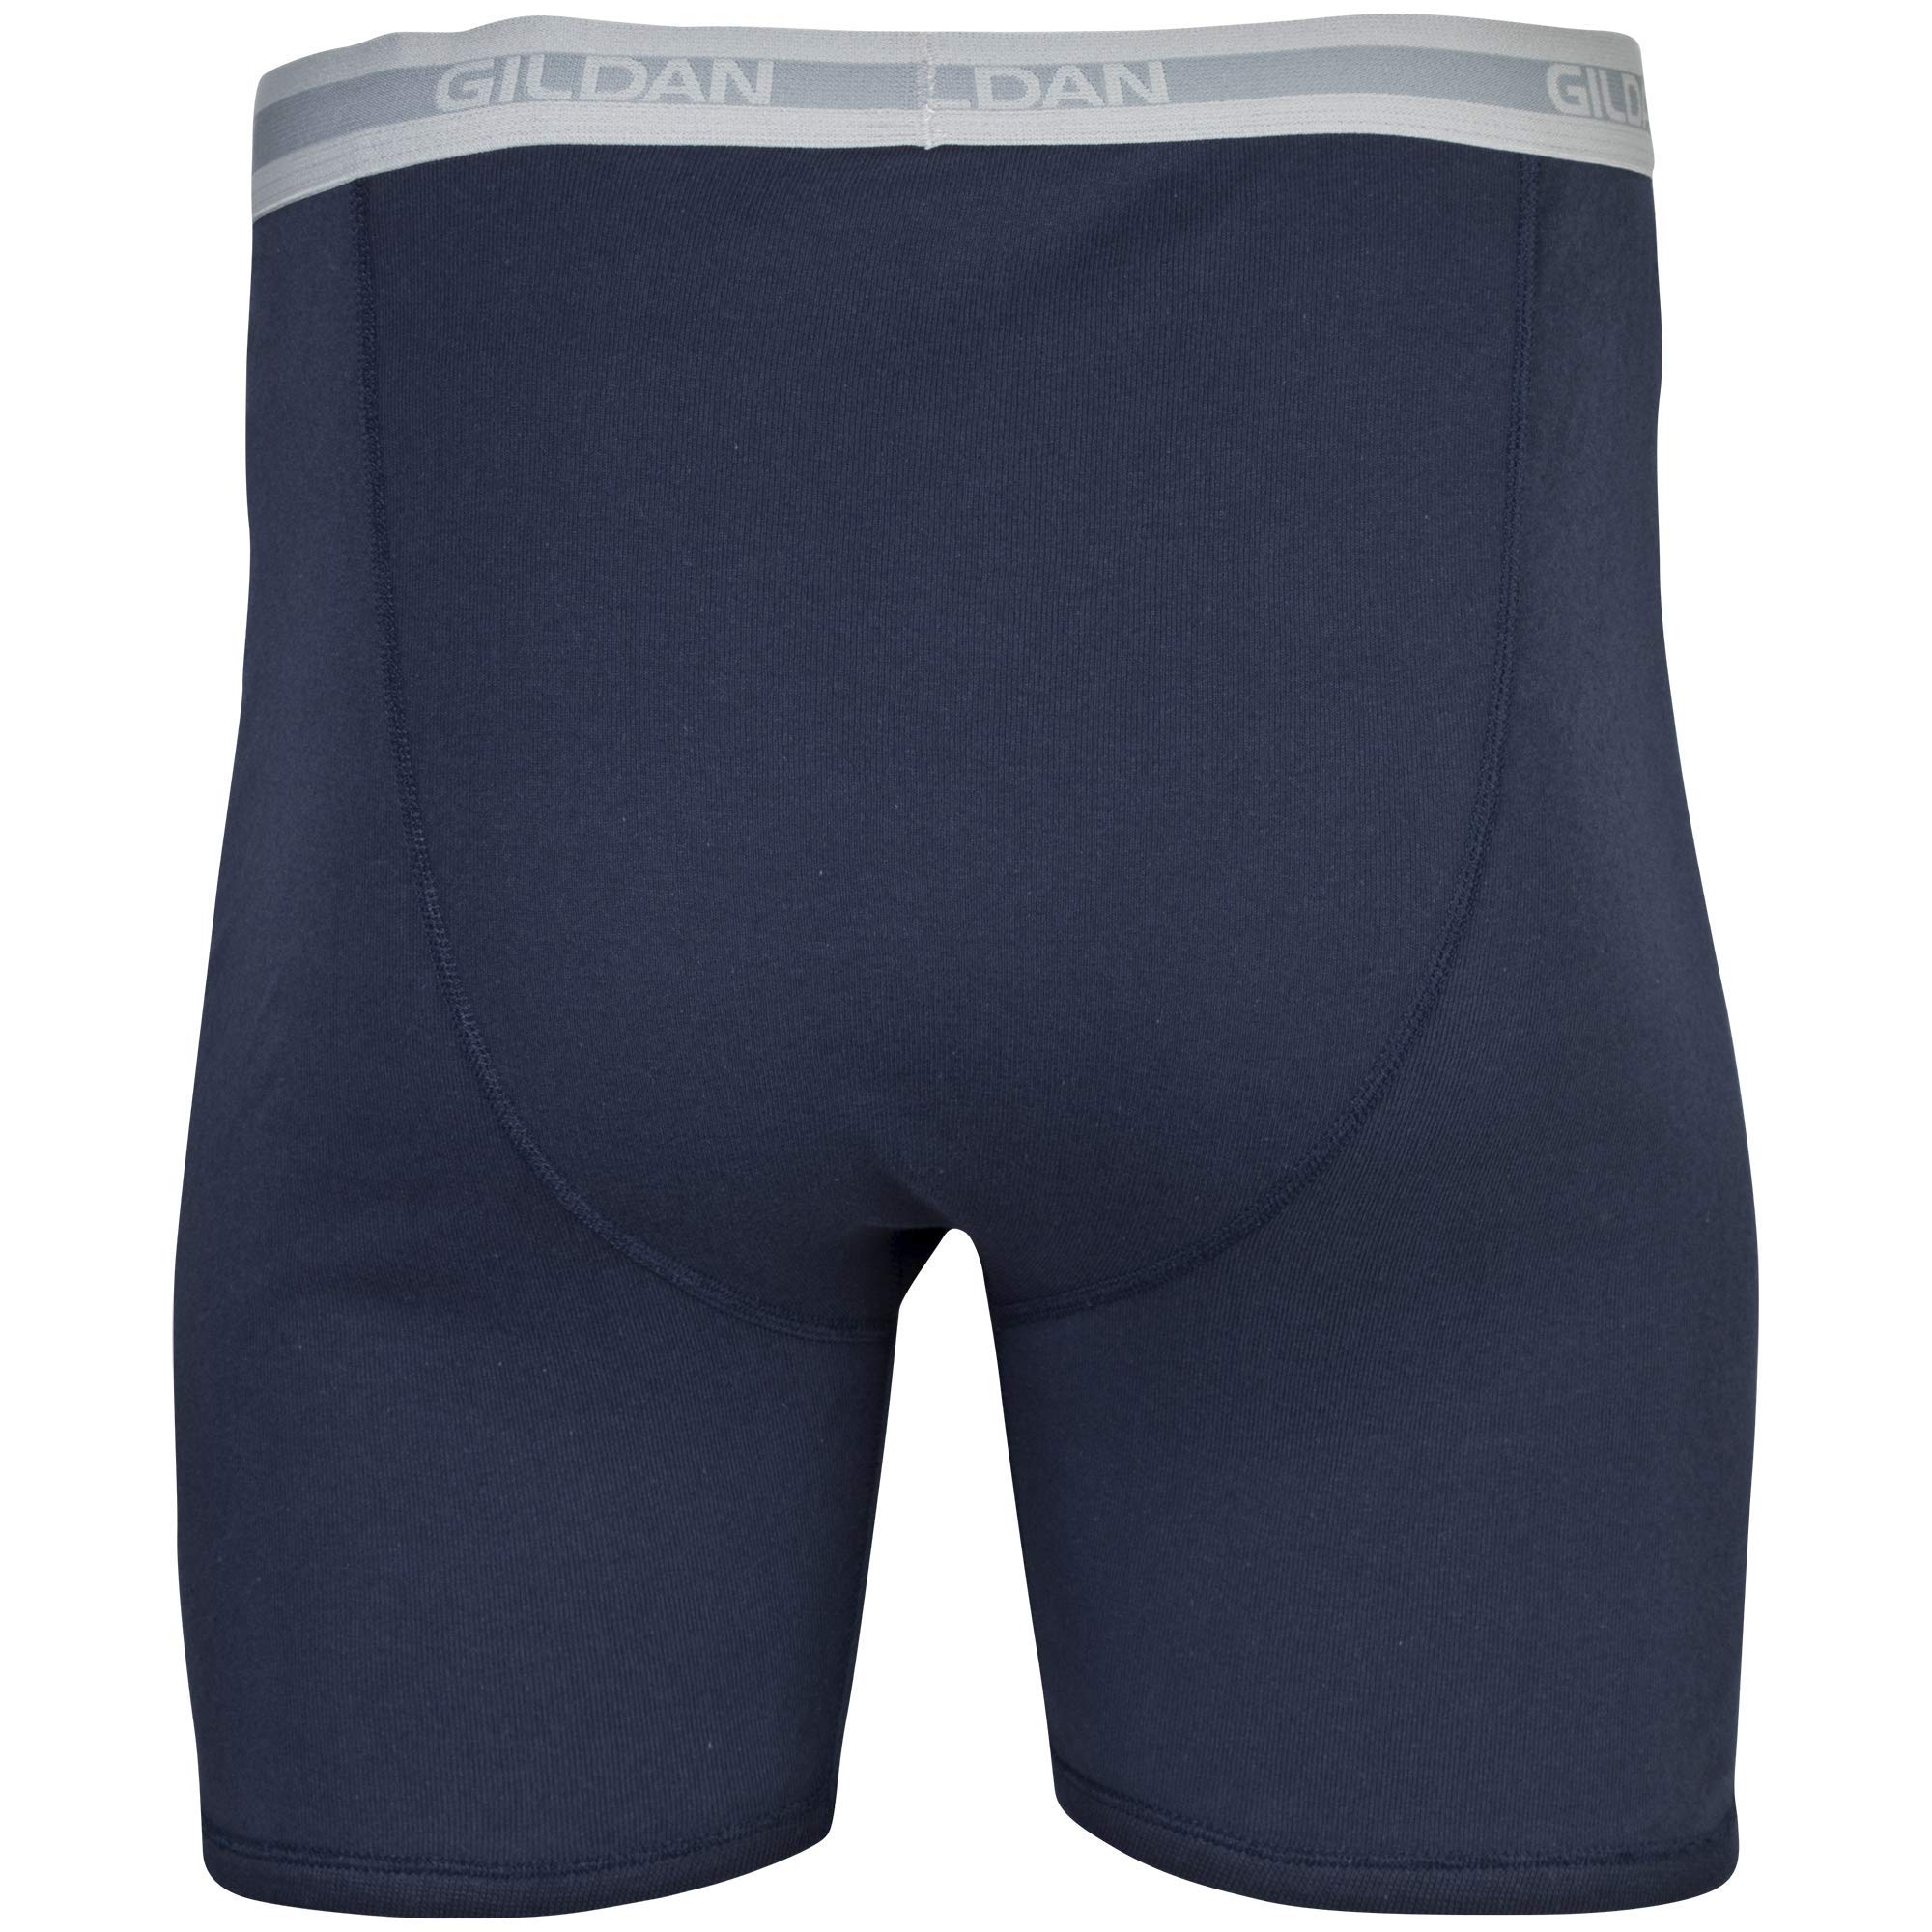 Gildan Men's Underwear Boxer Briefs, Multipack